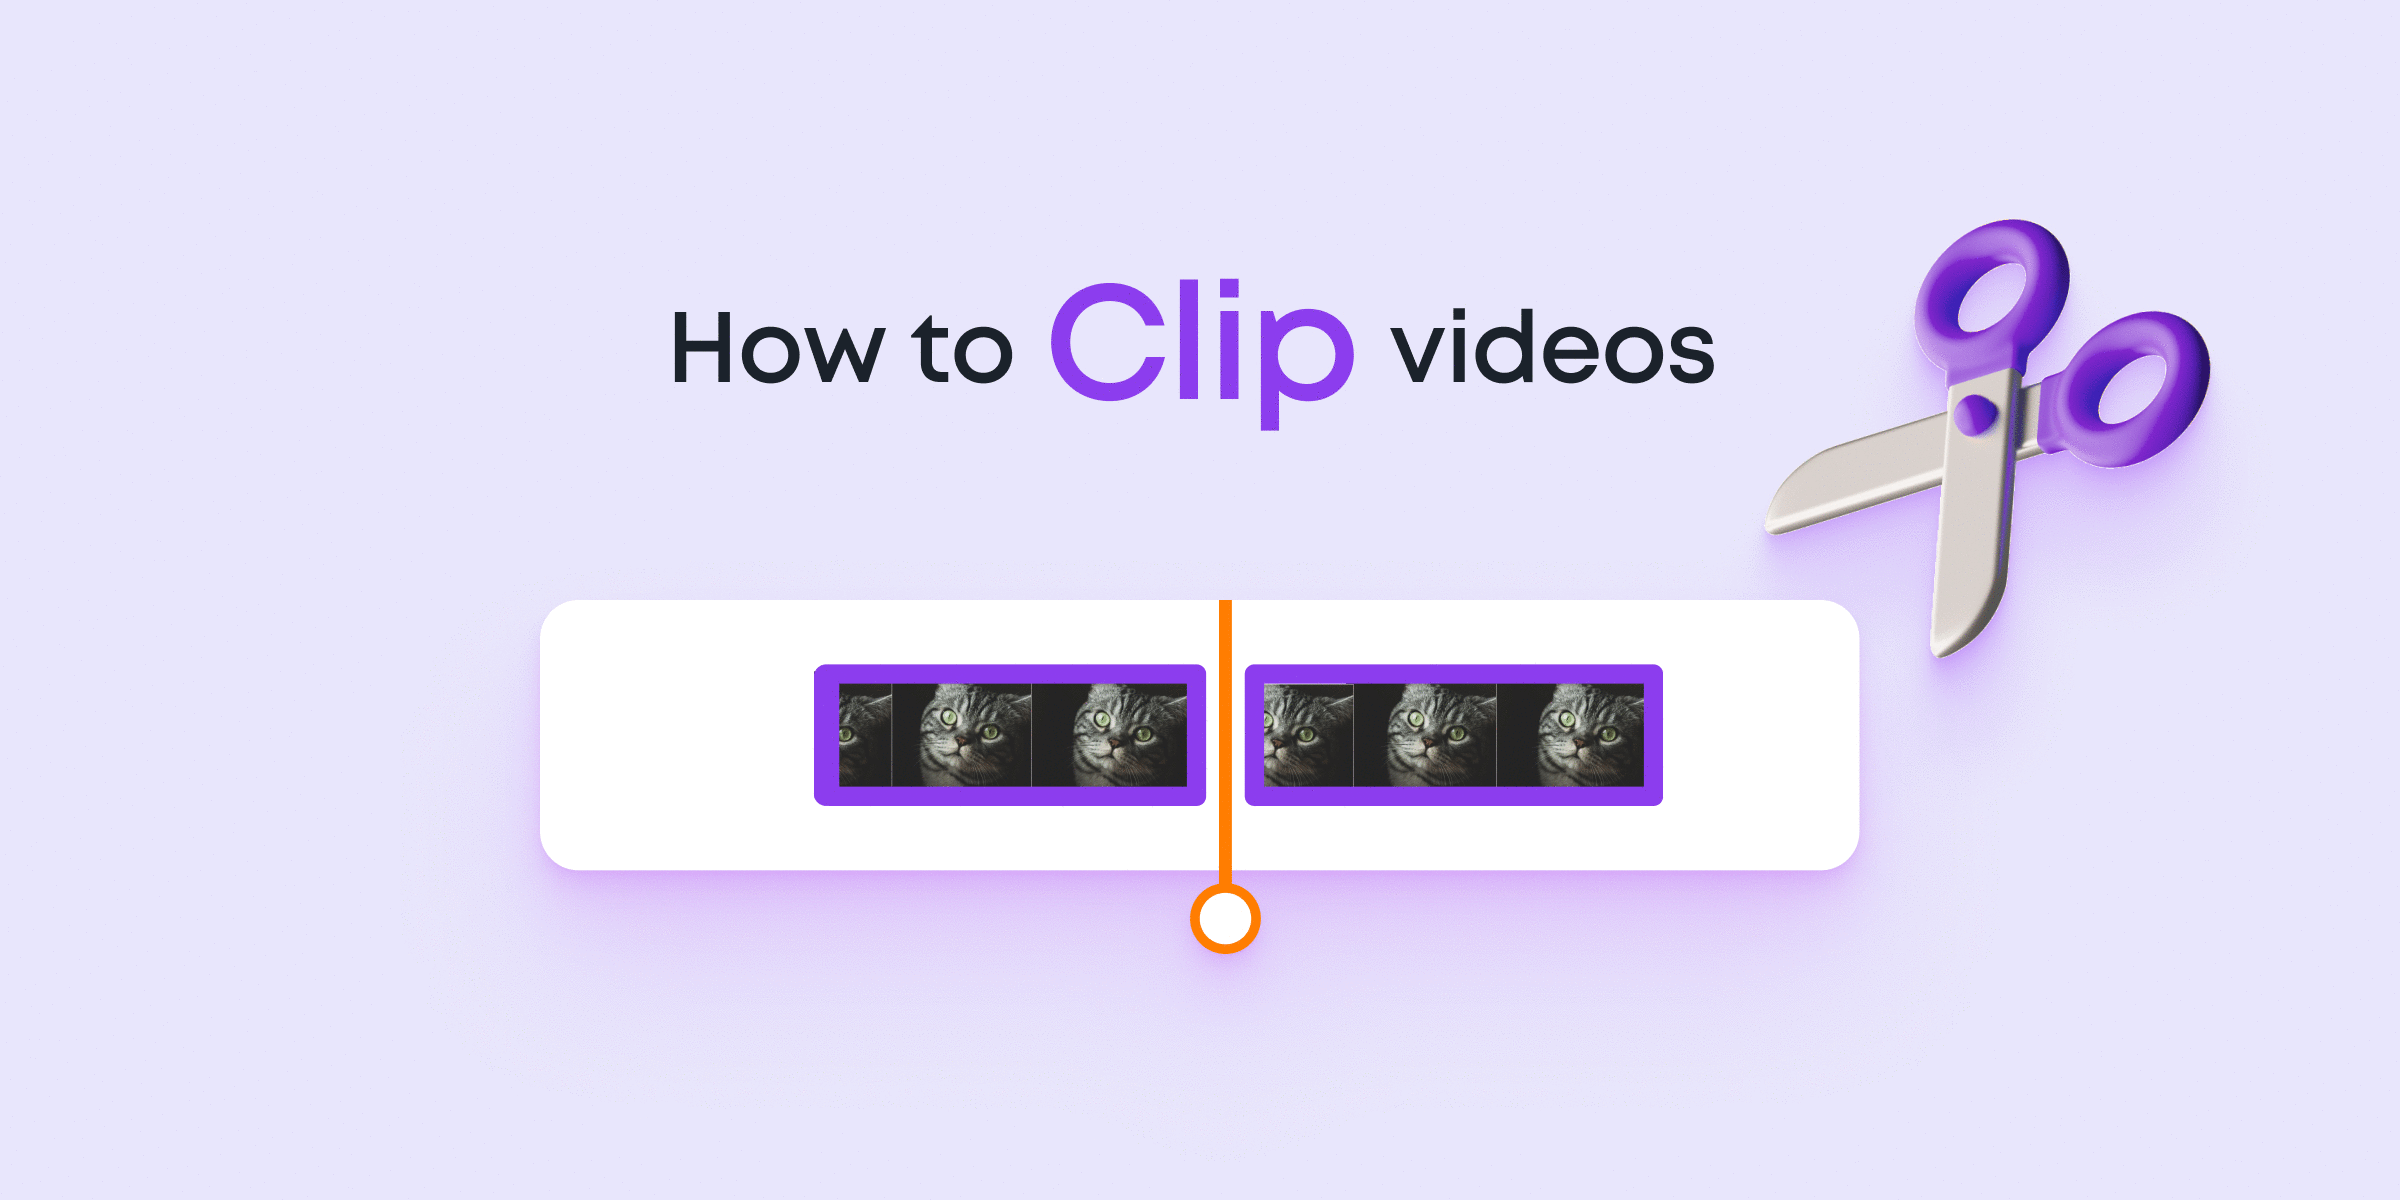 How to Cut a Video in Half in Windows 10